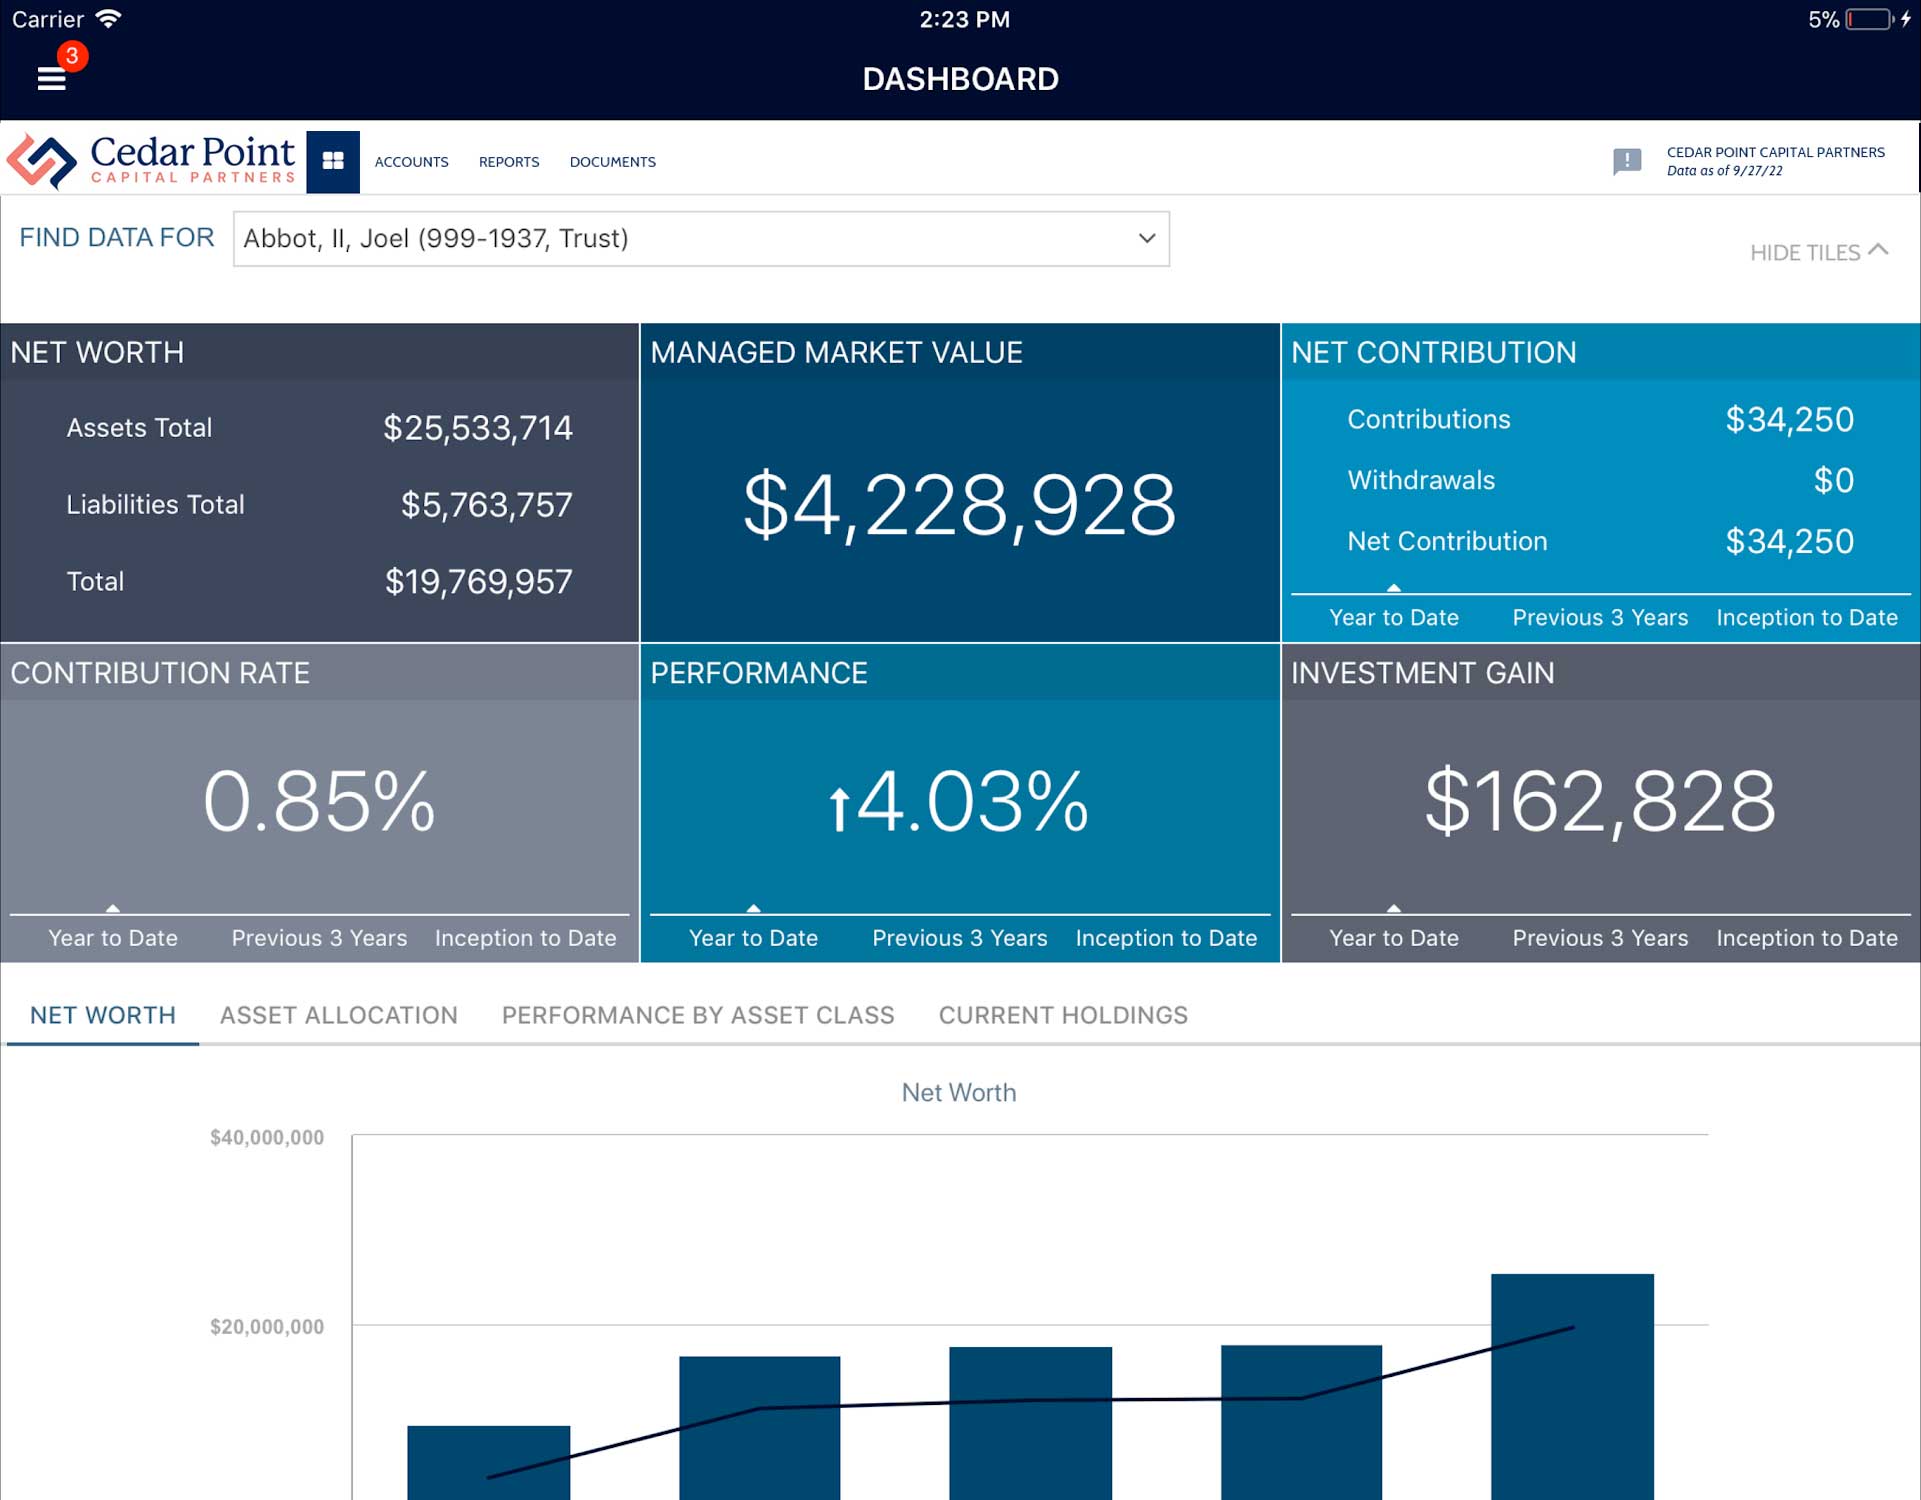 A screenshot of the Cedar Point Capital Partners' financial dashboard